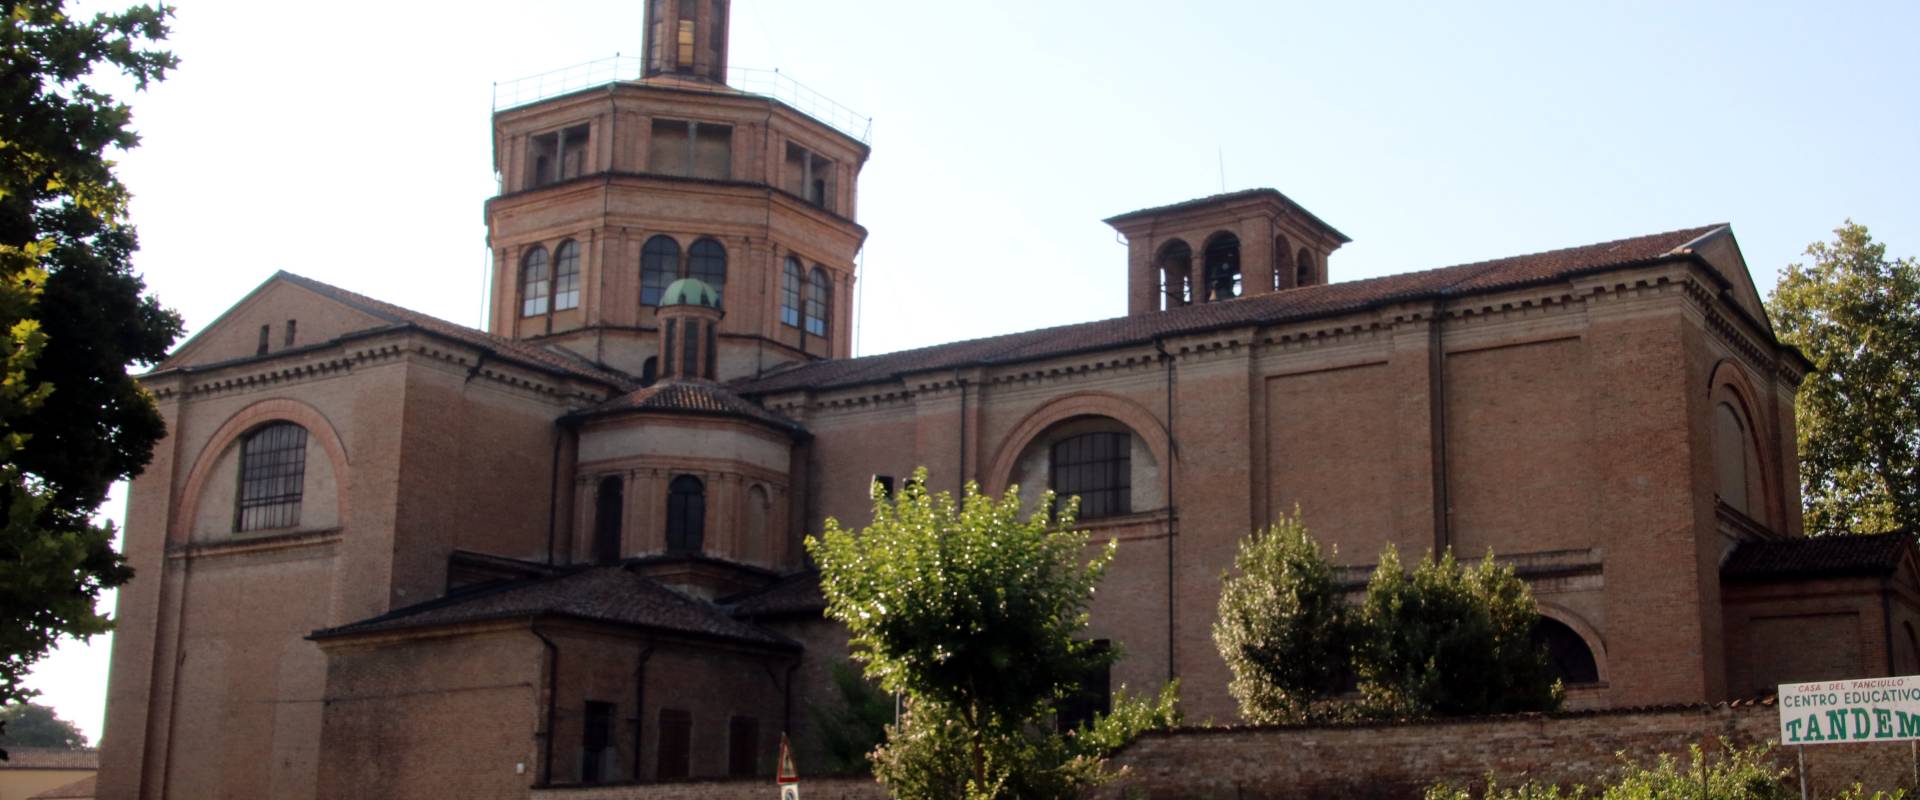 Basilica di Santa Maria di Campagna (Piacenza) 12 foto di Mongolo1984